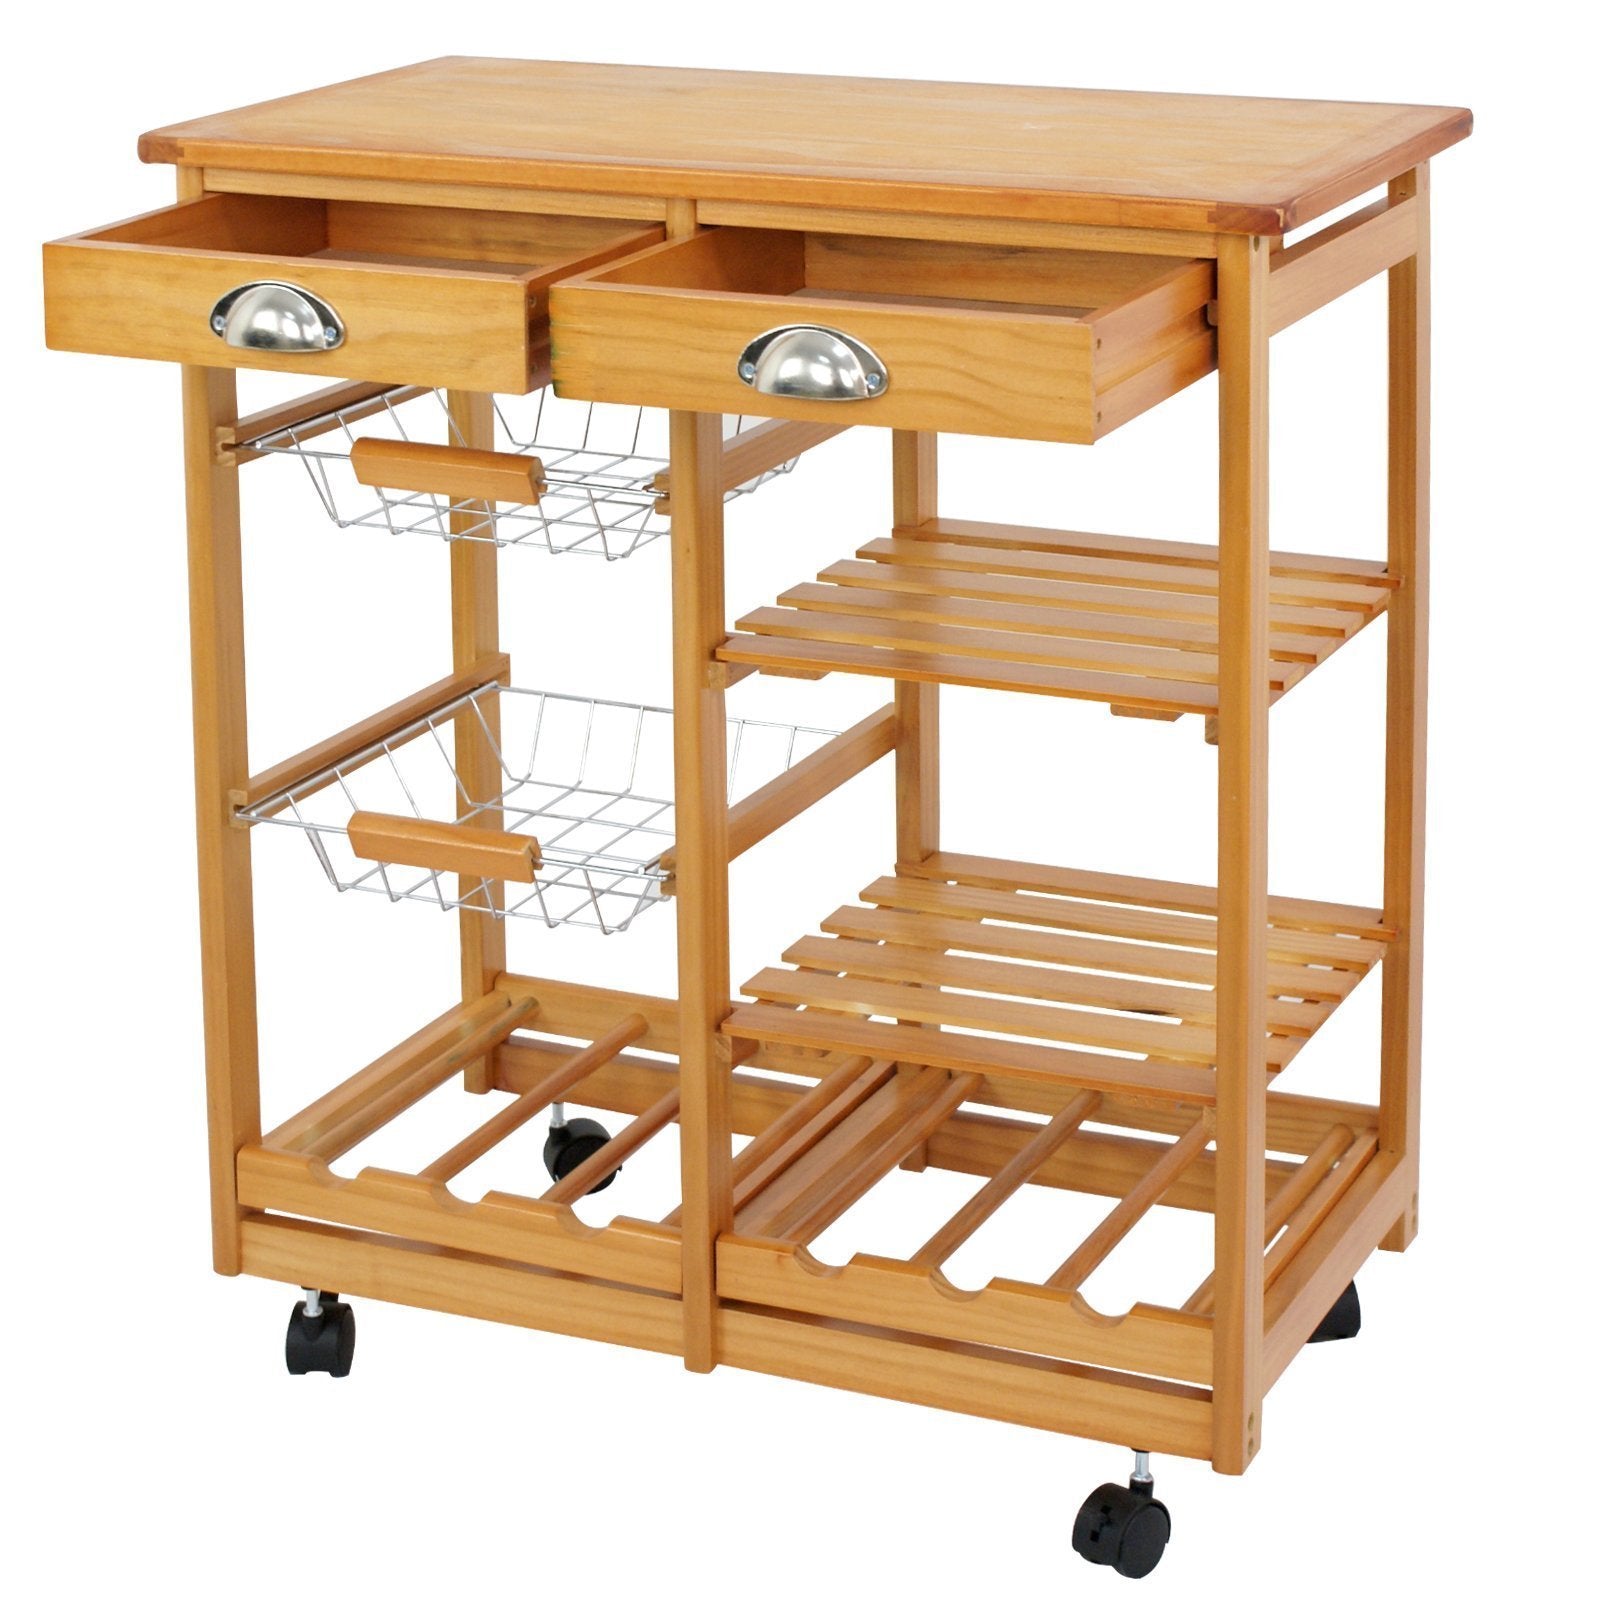 Nova Microdermabrasion Rolling Wood Kitchen Island Storage Trolley Utility Cart Rack w/Storage Drawers/Baskets Dining Stand w/Wheels Countertop (Wood)